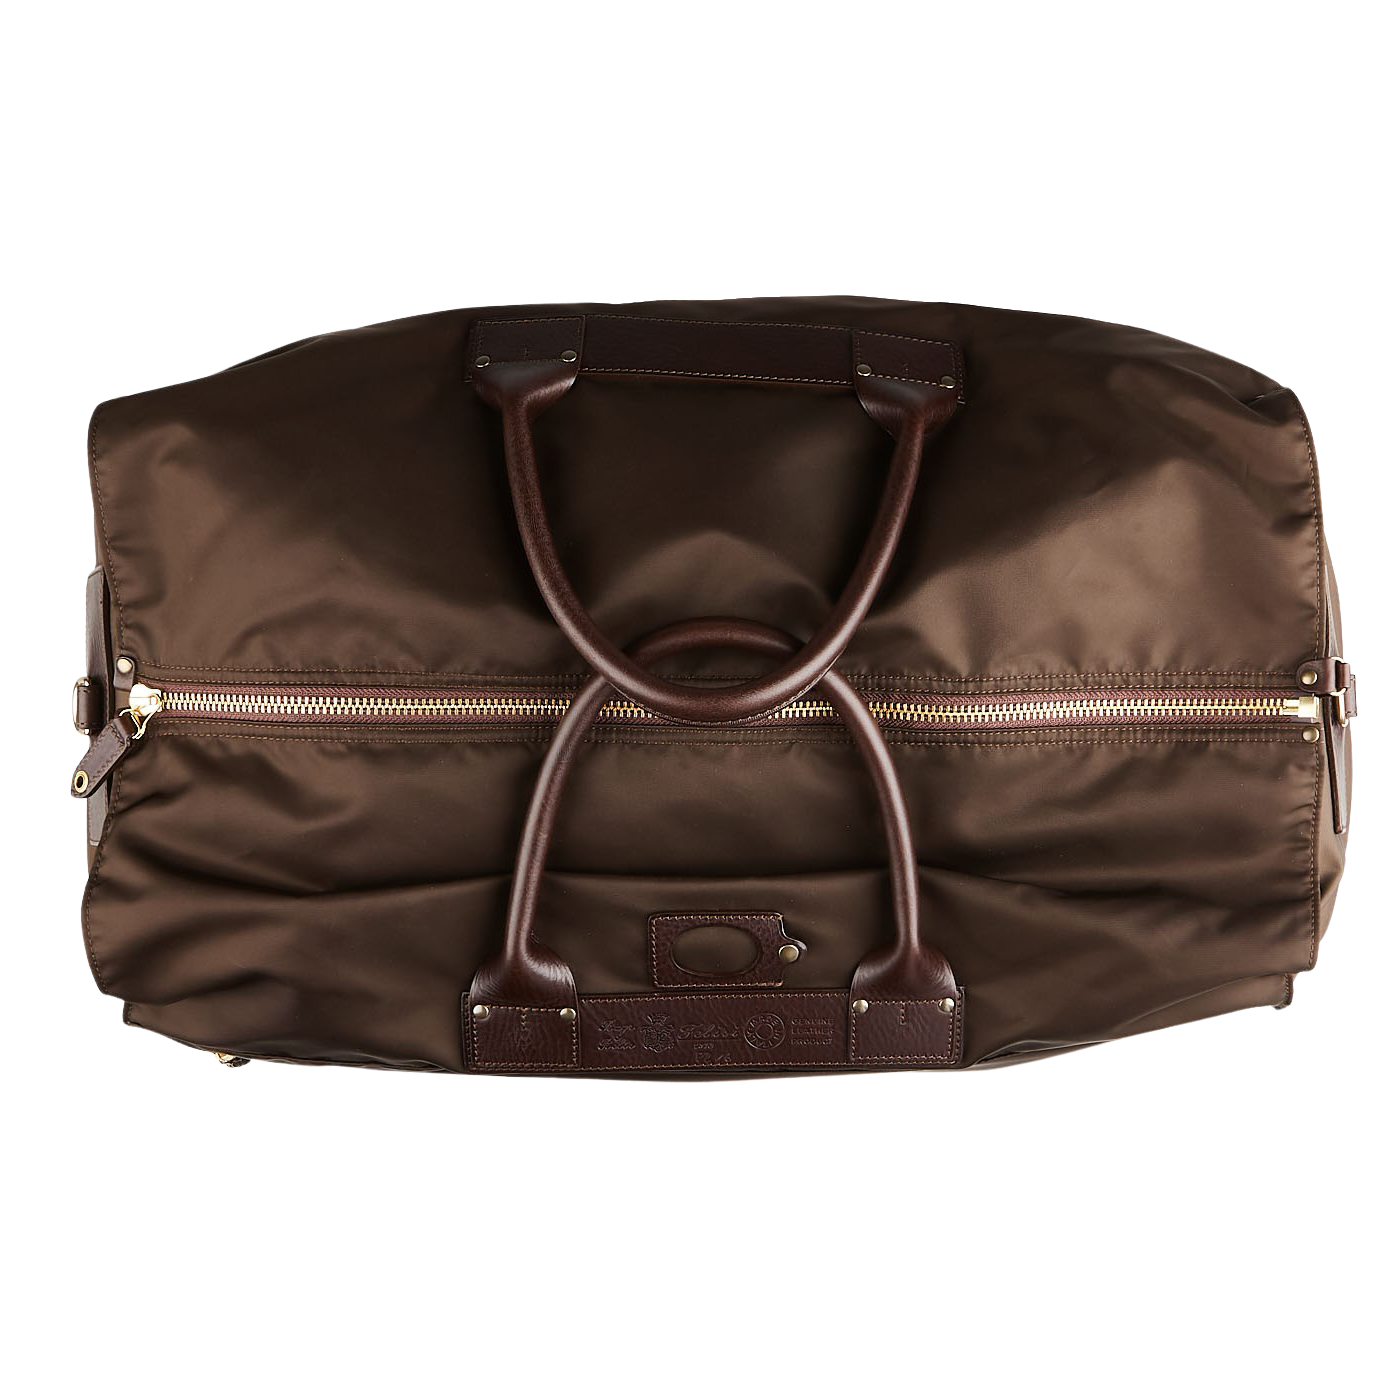 Felisi Dark Brown Nylon Leather Large Travel Bag Top